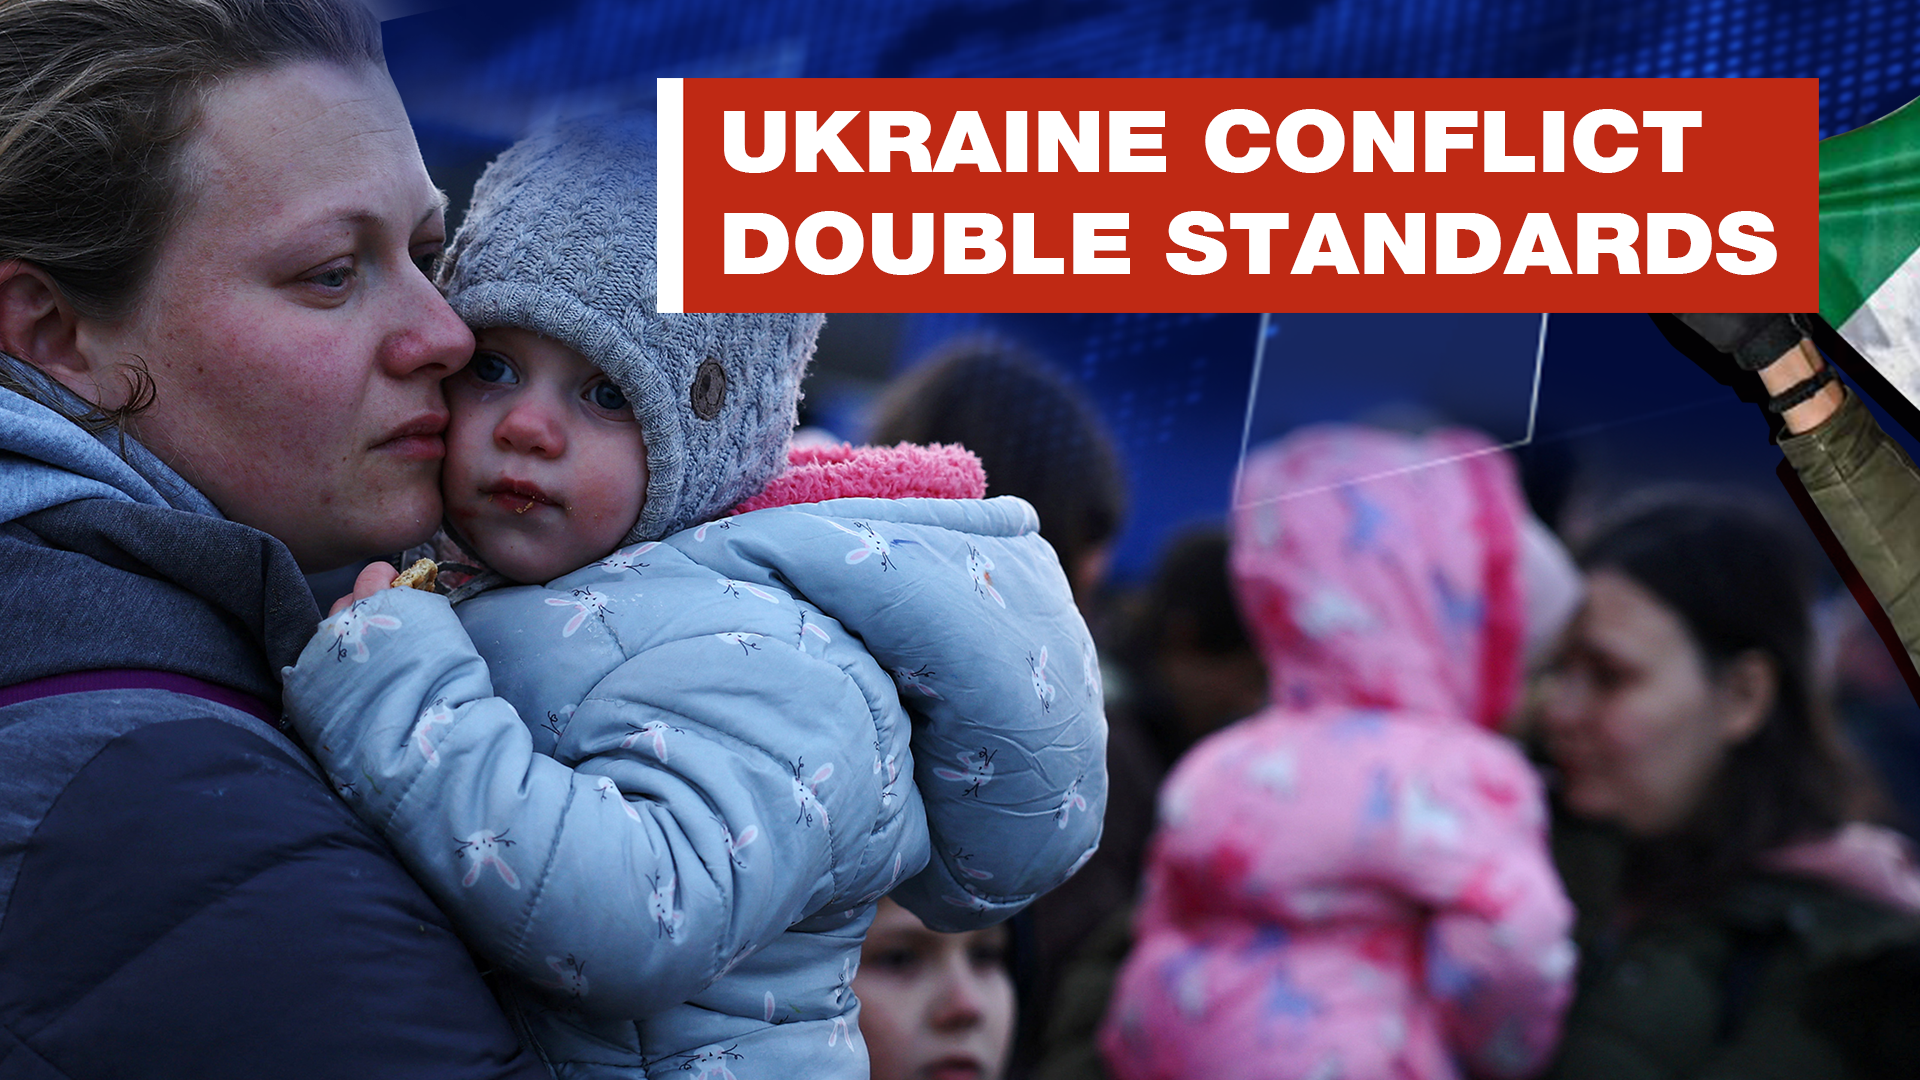 Media's double standard on Ukraine conflict